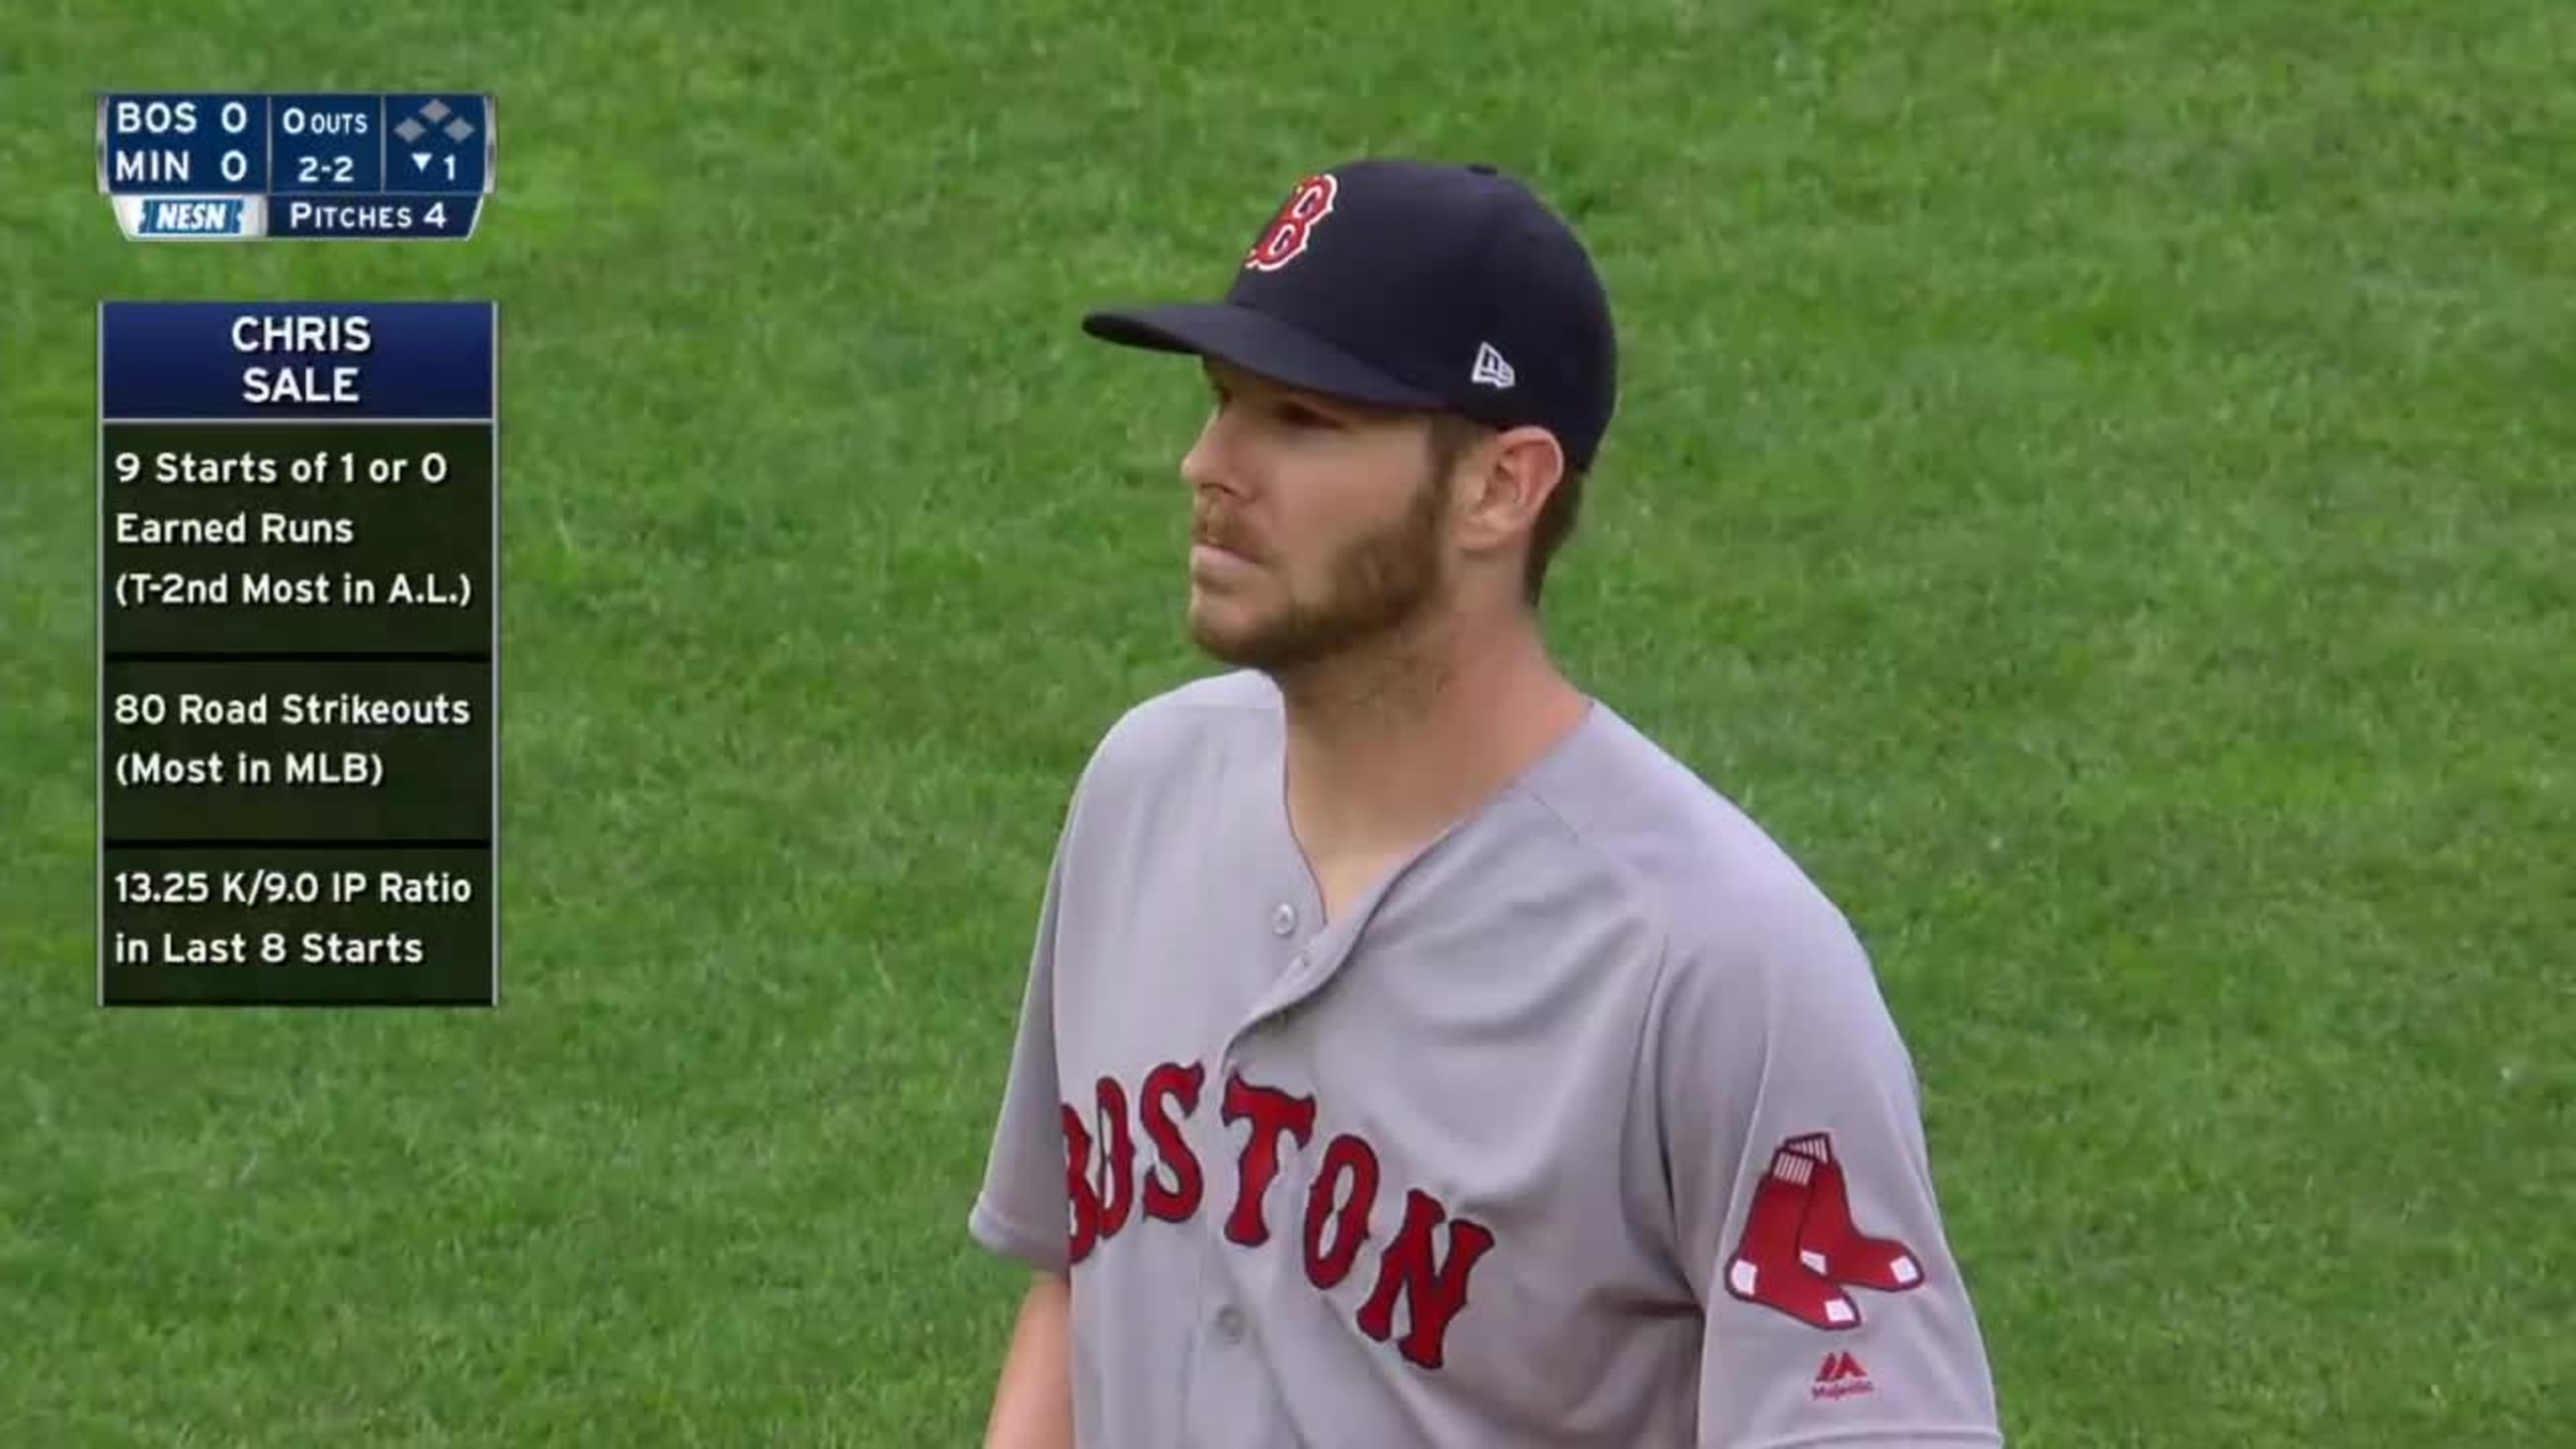 Boston Red Sox Road Uniform - American League (AL) - Chris